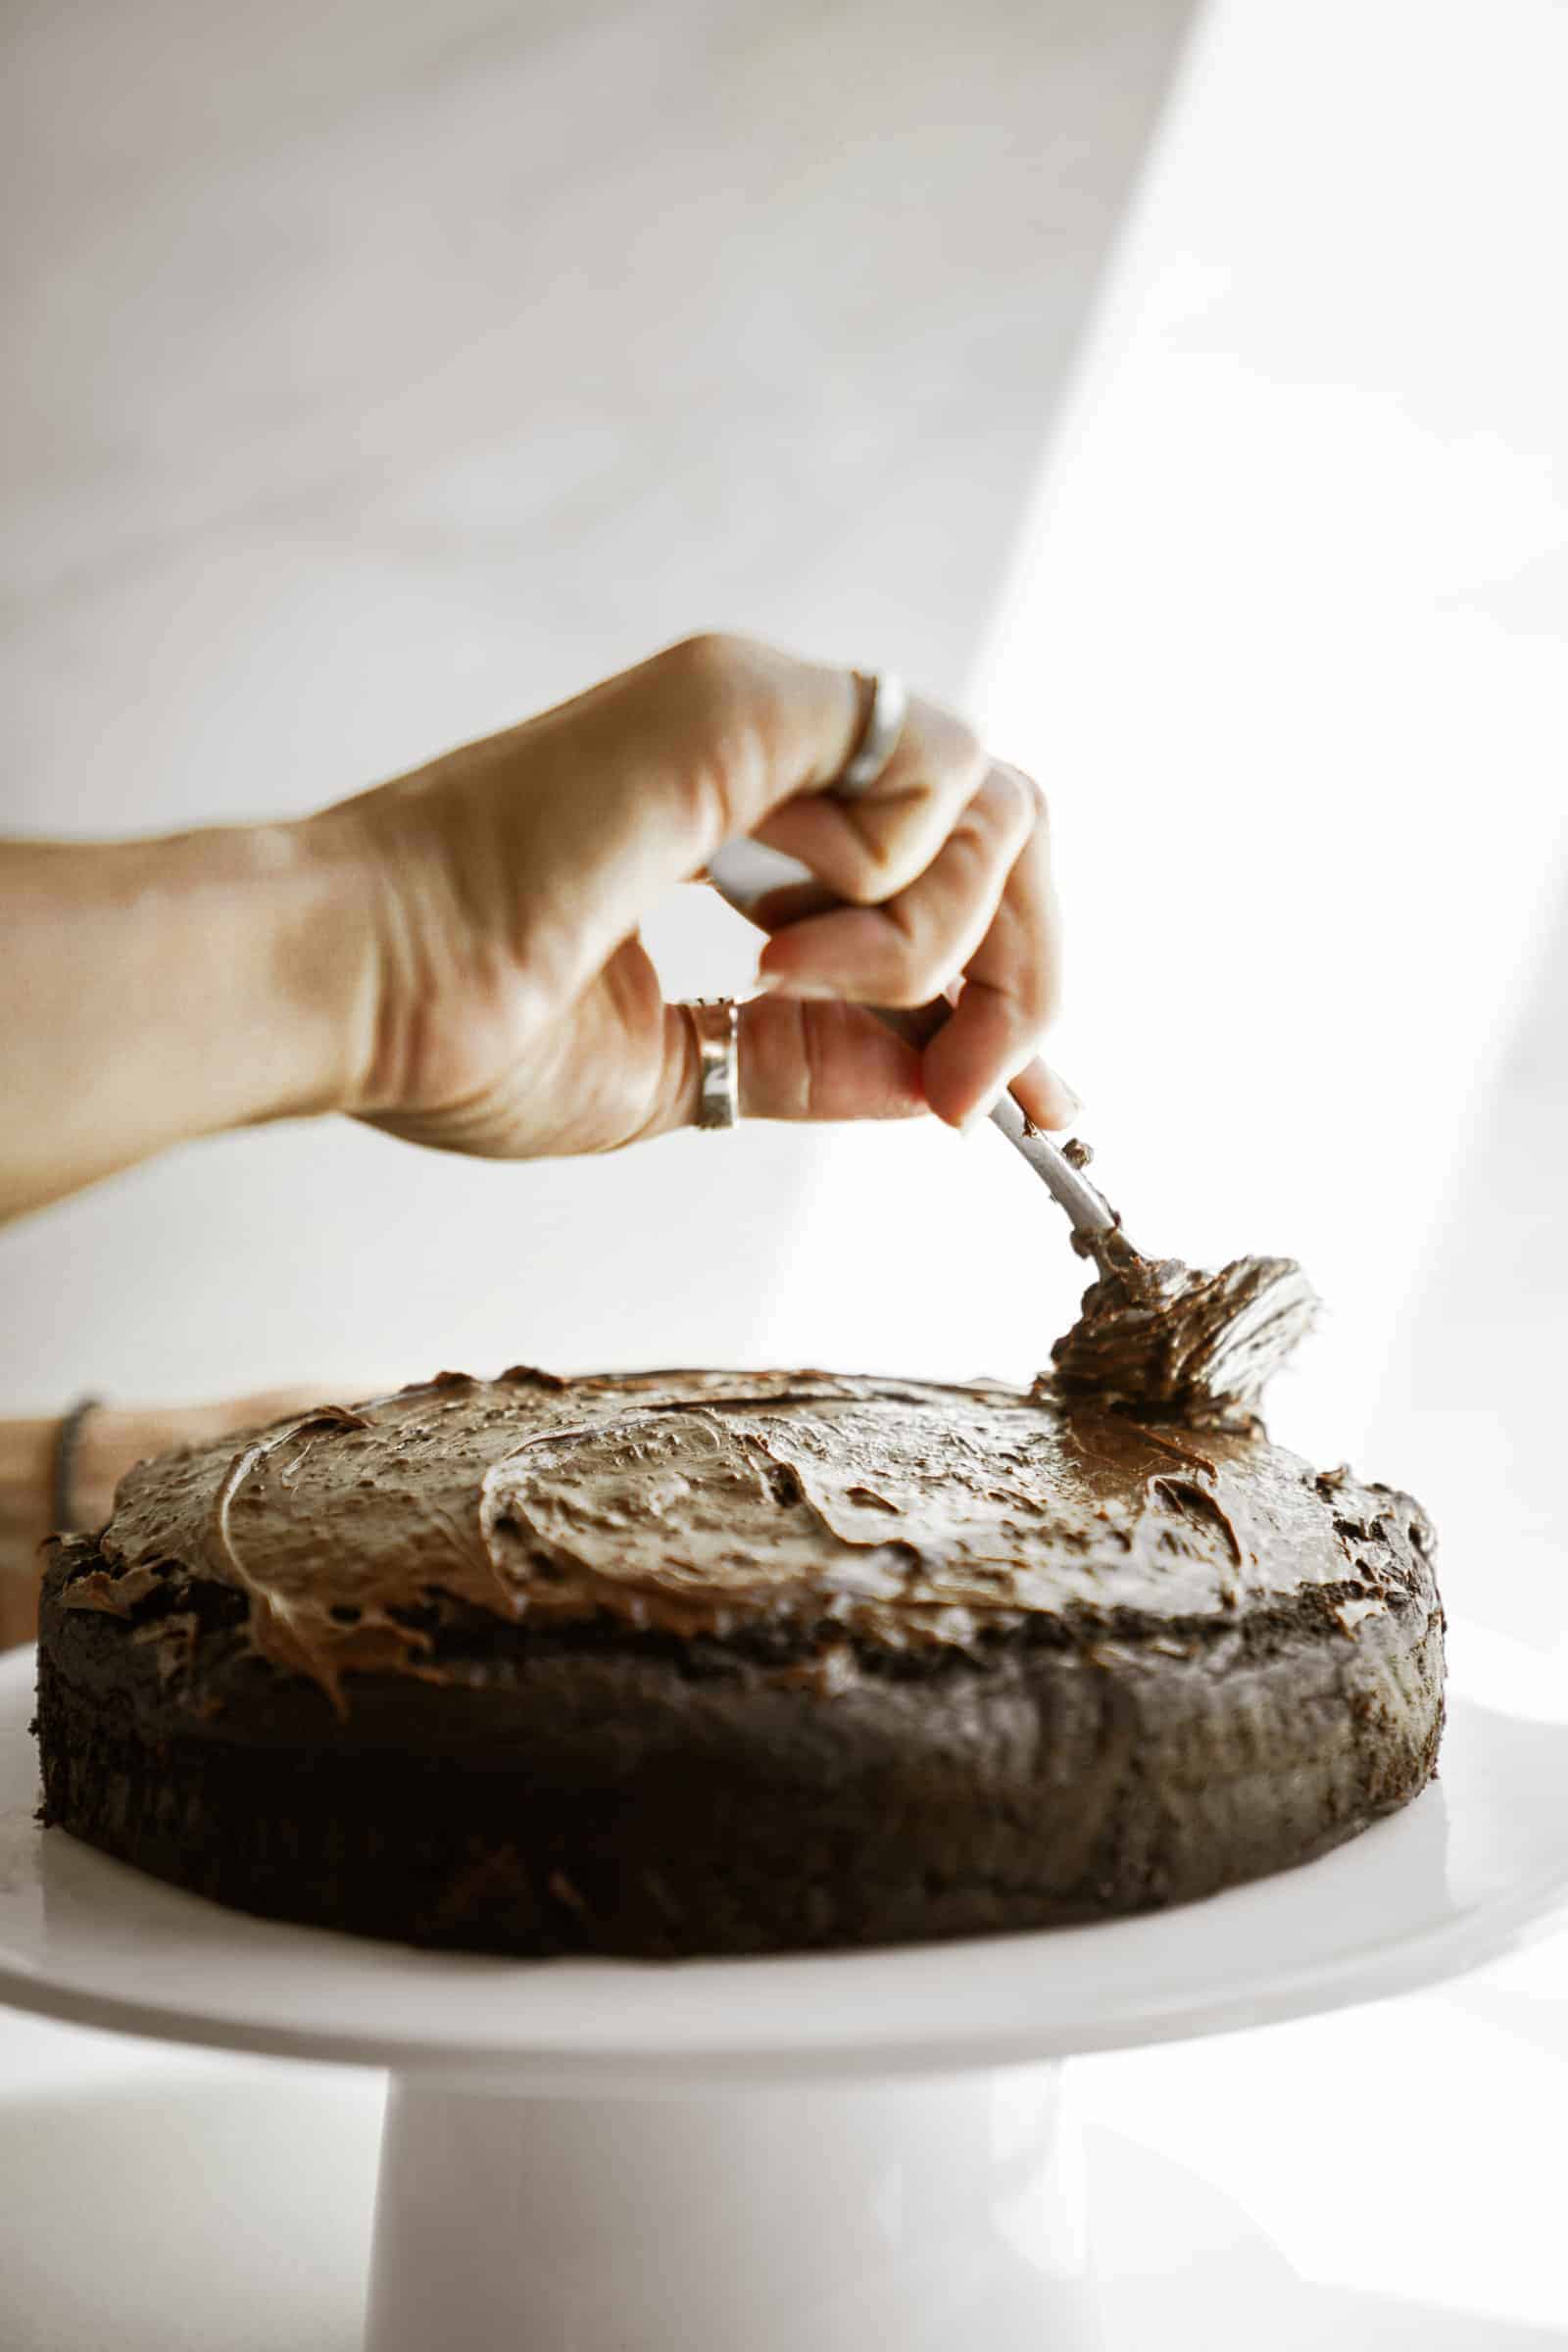 Icing vegan chocolate cake